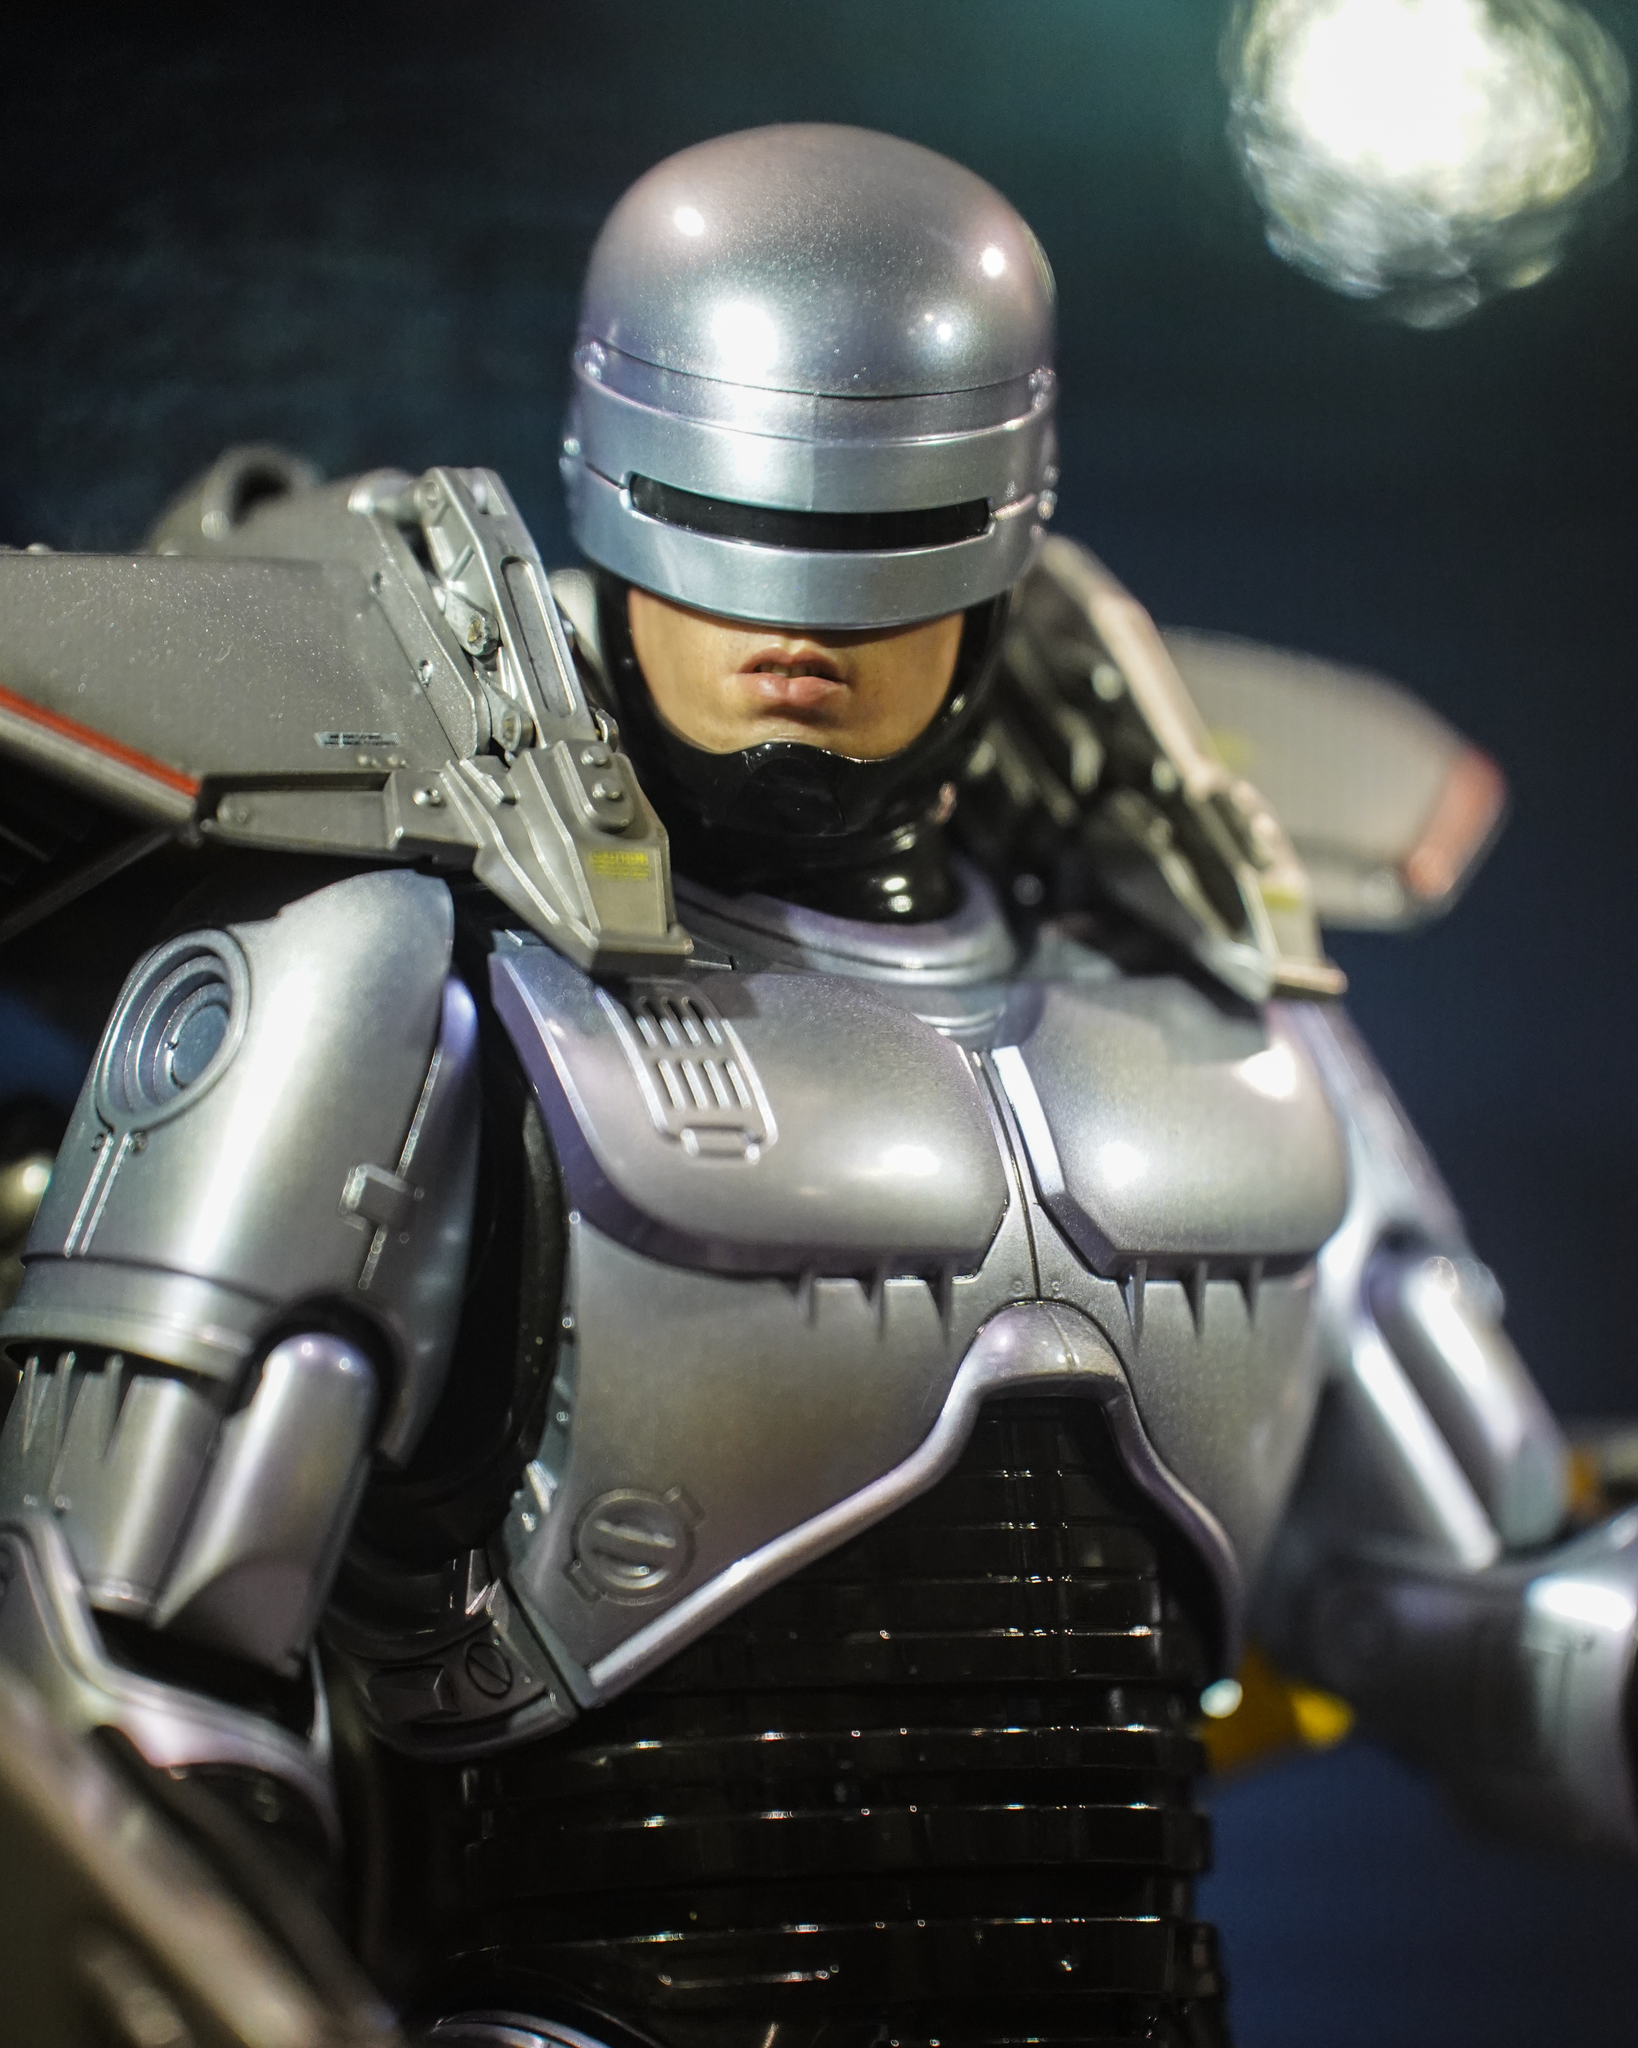 RoboCop 3 - Figurine Échelle 1:6 Diecast Hot Toys 911580 MMS669-D49